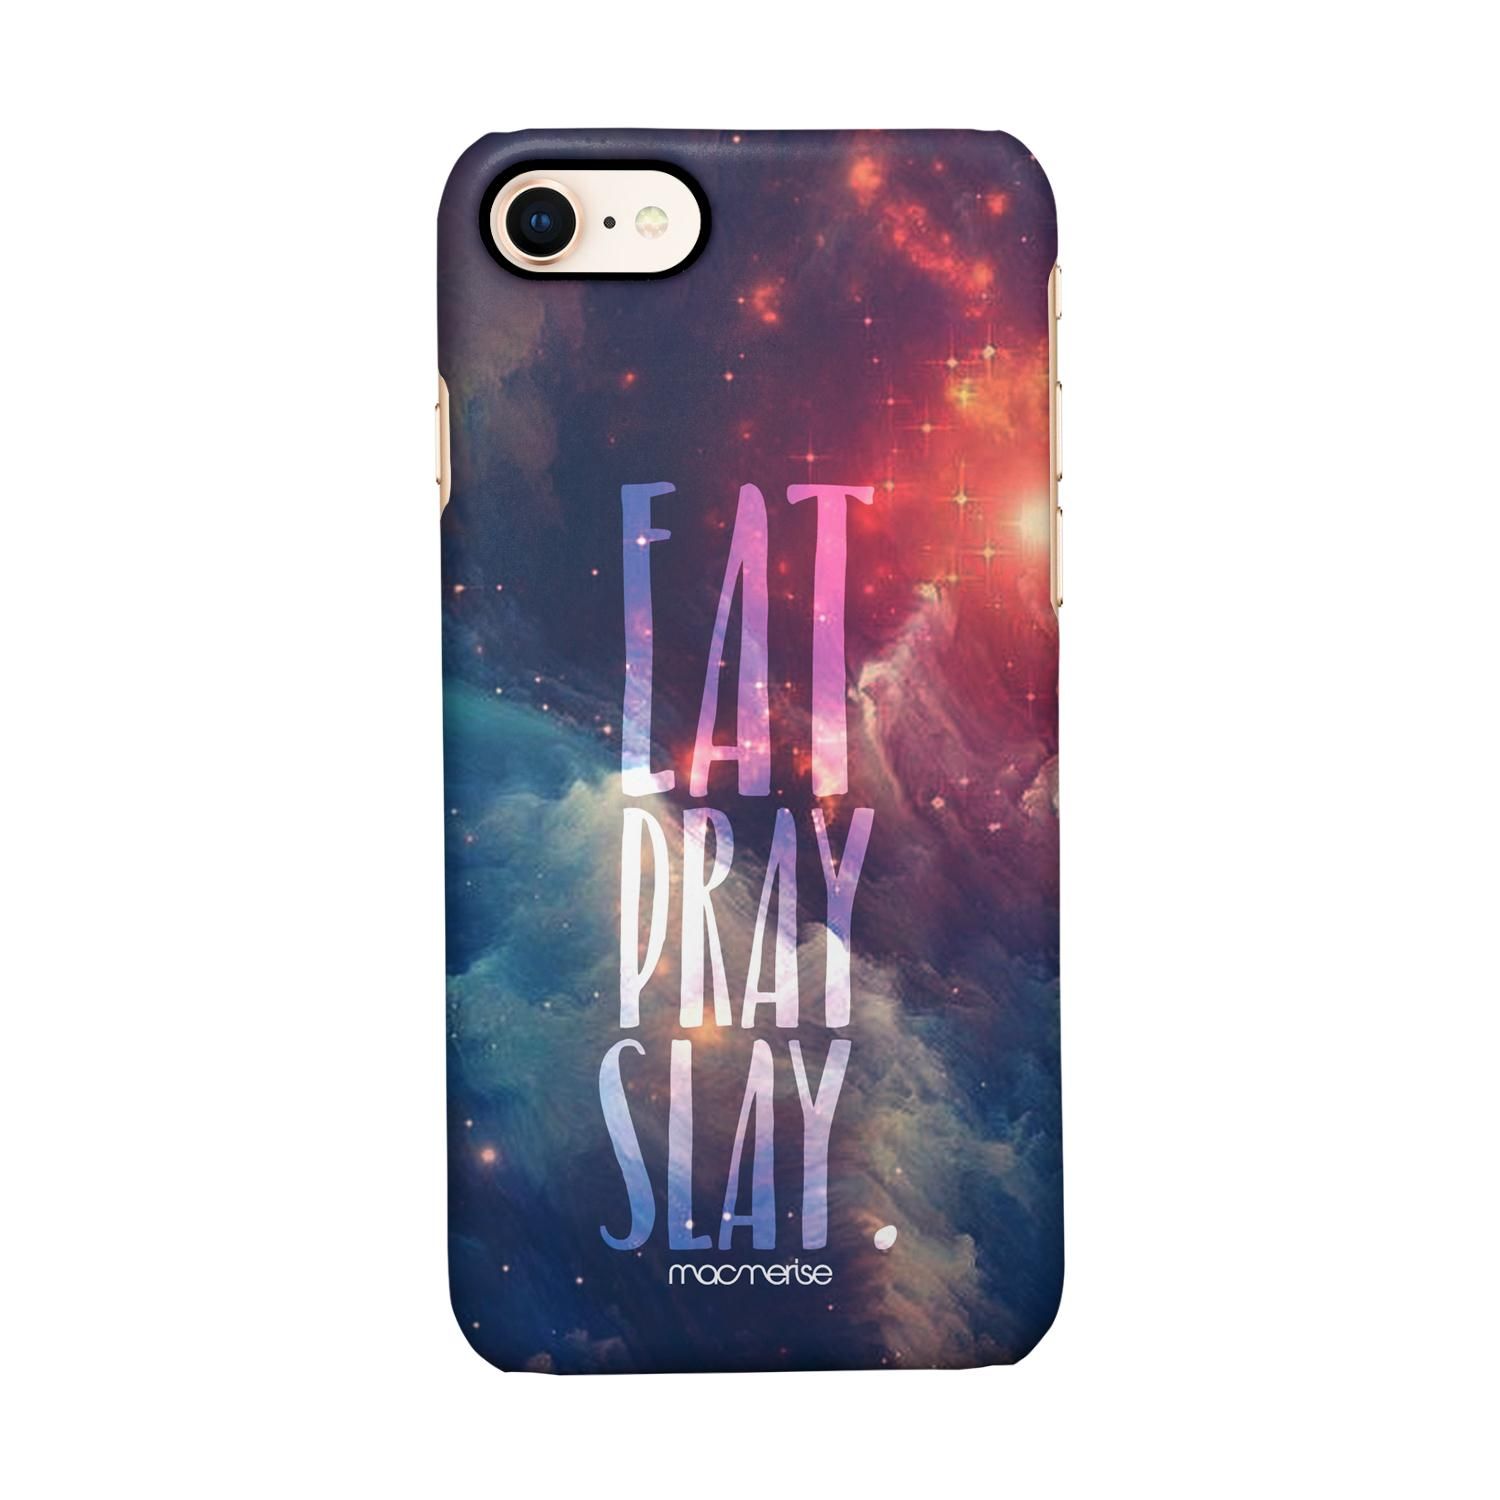 Buy Eat Pray Slay - Sleek Phone Case for iPhone 8 Online